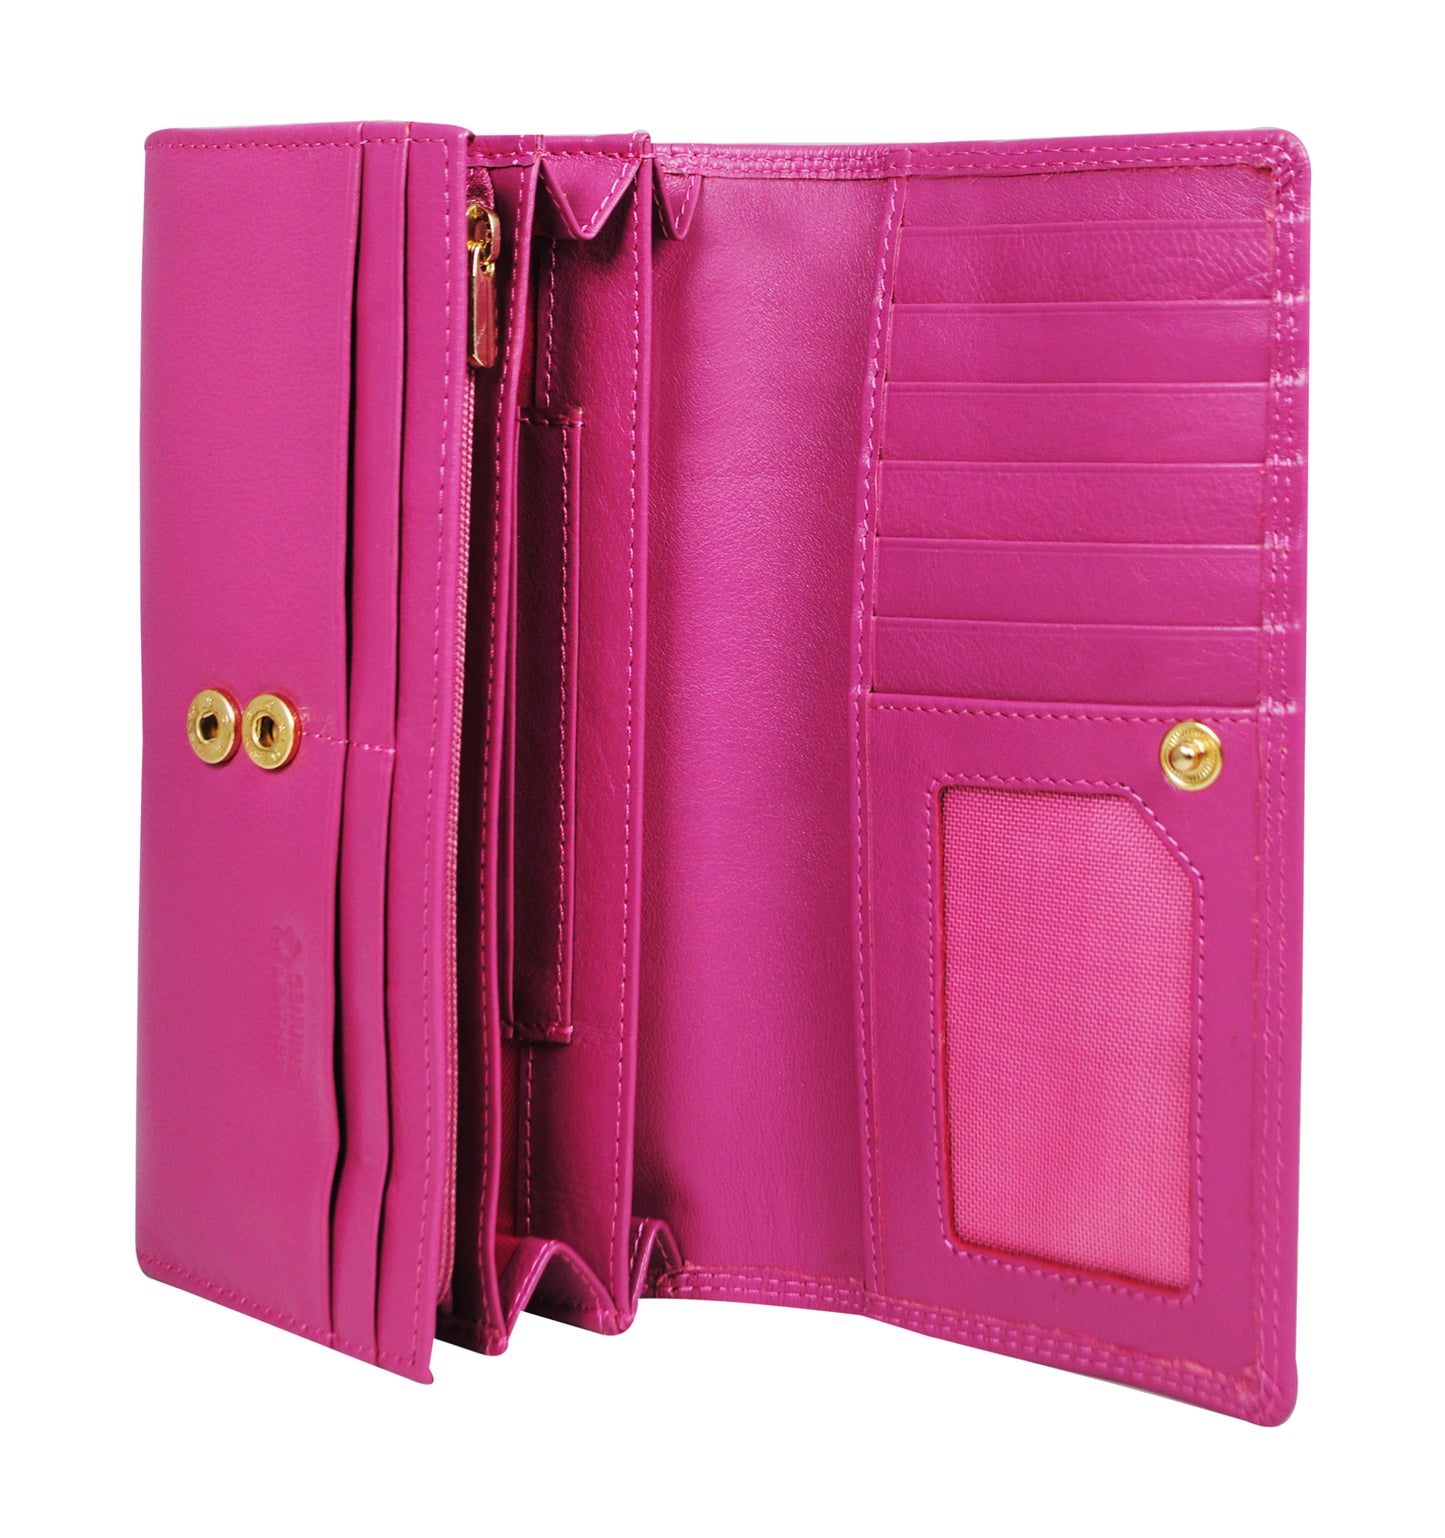 Calfnero Genuine Leather Women's Wallet (12314-Pink)